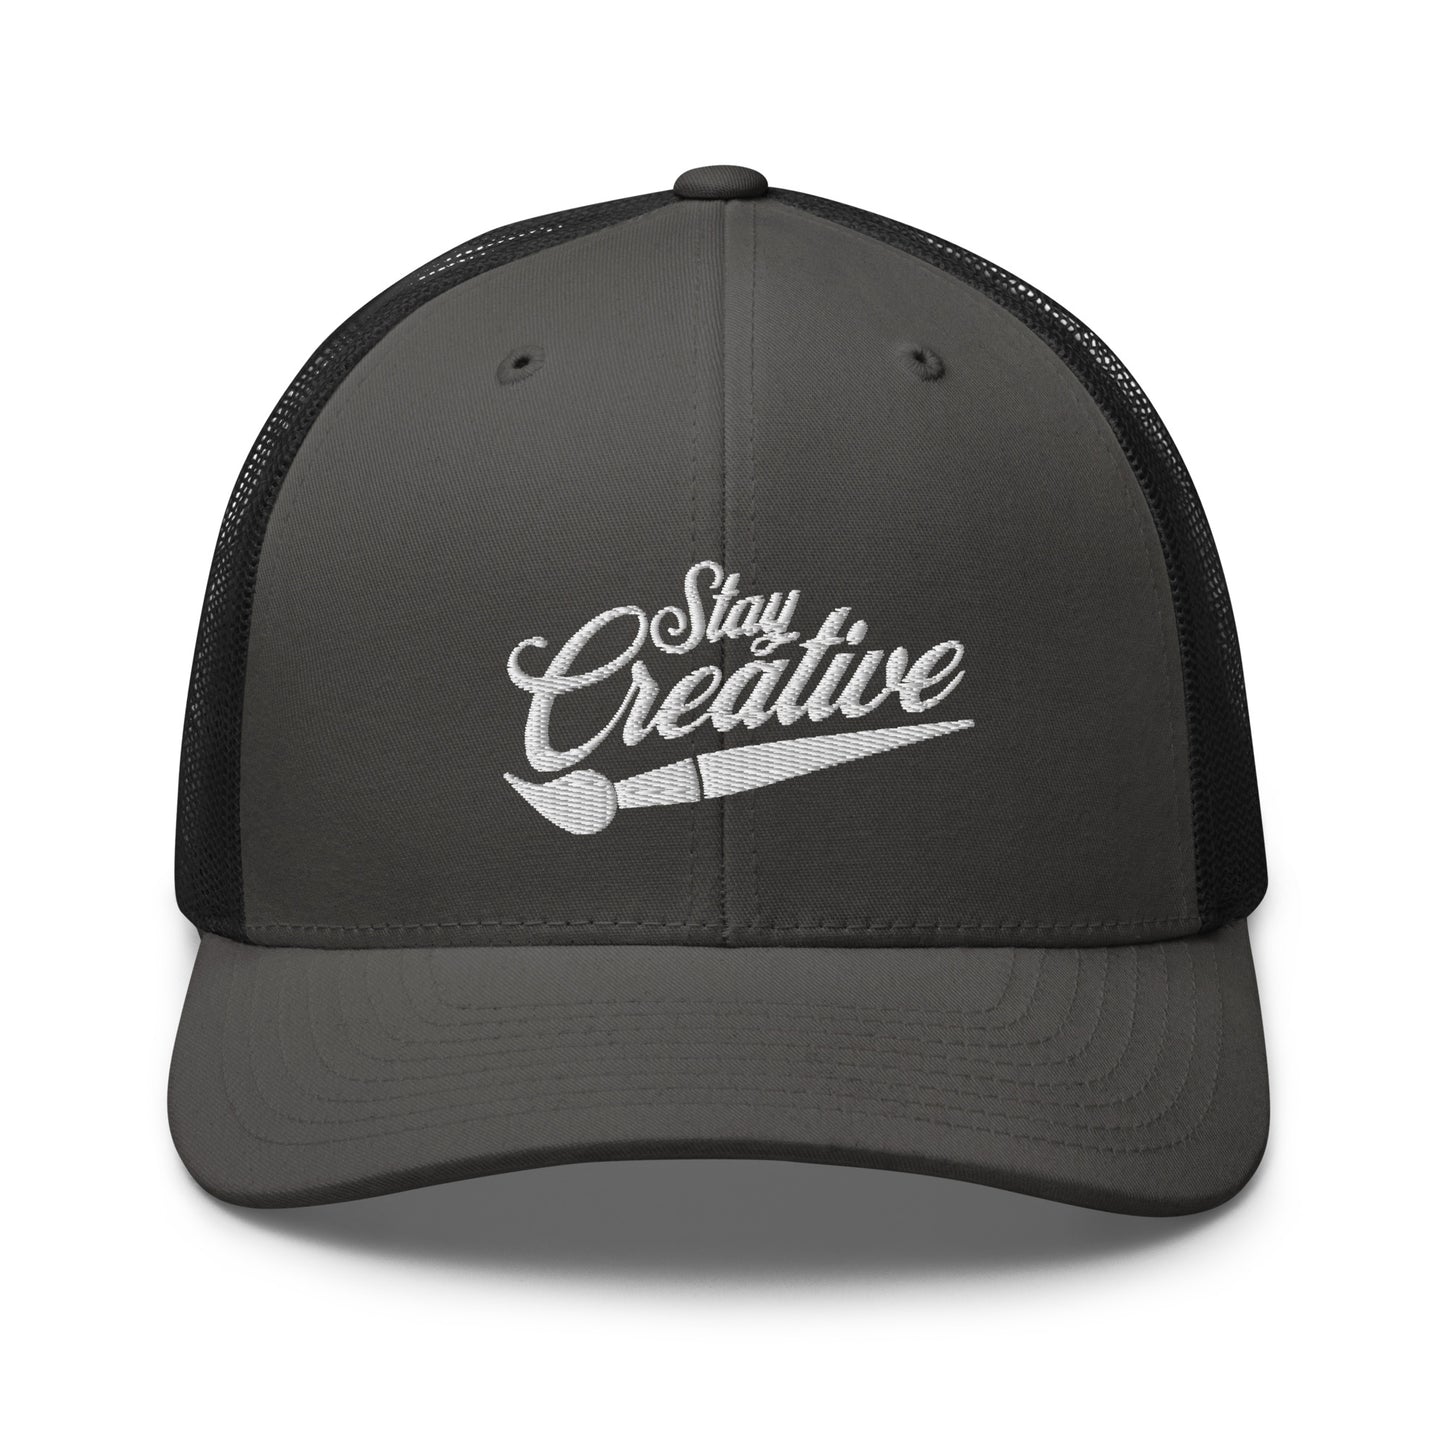 “Stay Creative” Trucker Hat by Christy Beasley